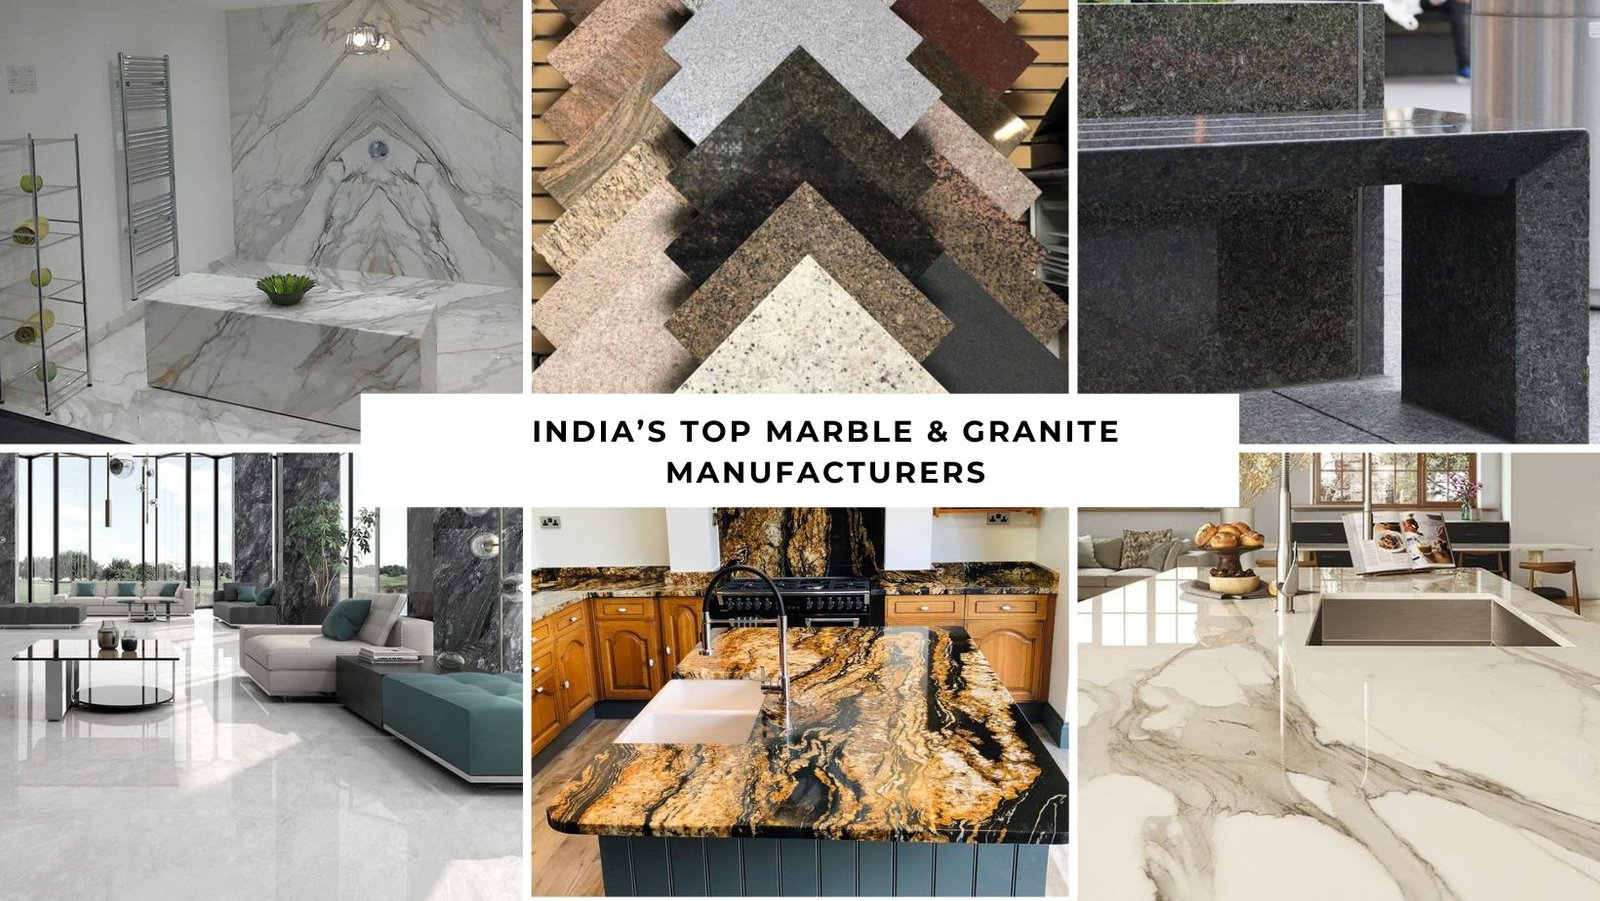 India’s Top Marble & Granite Manufacturers